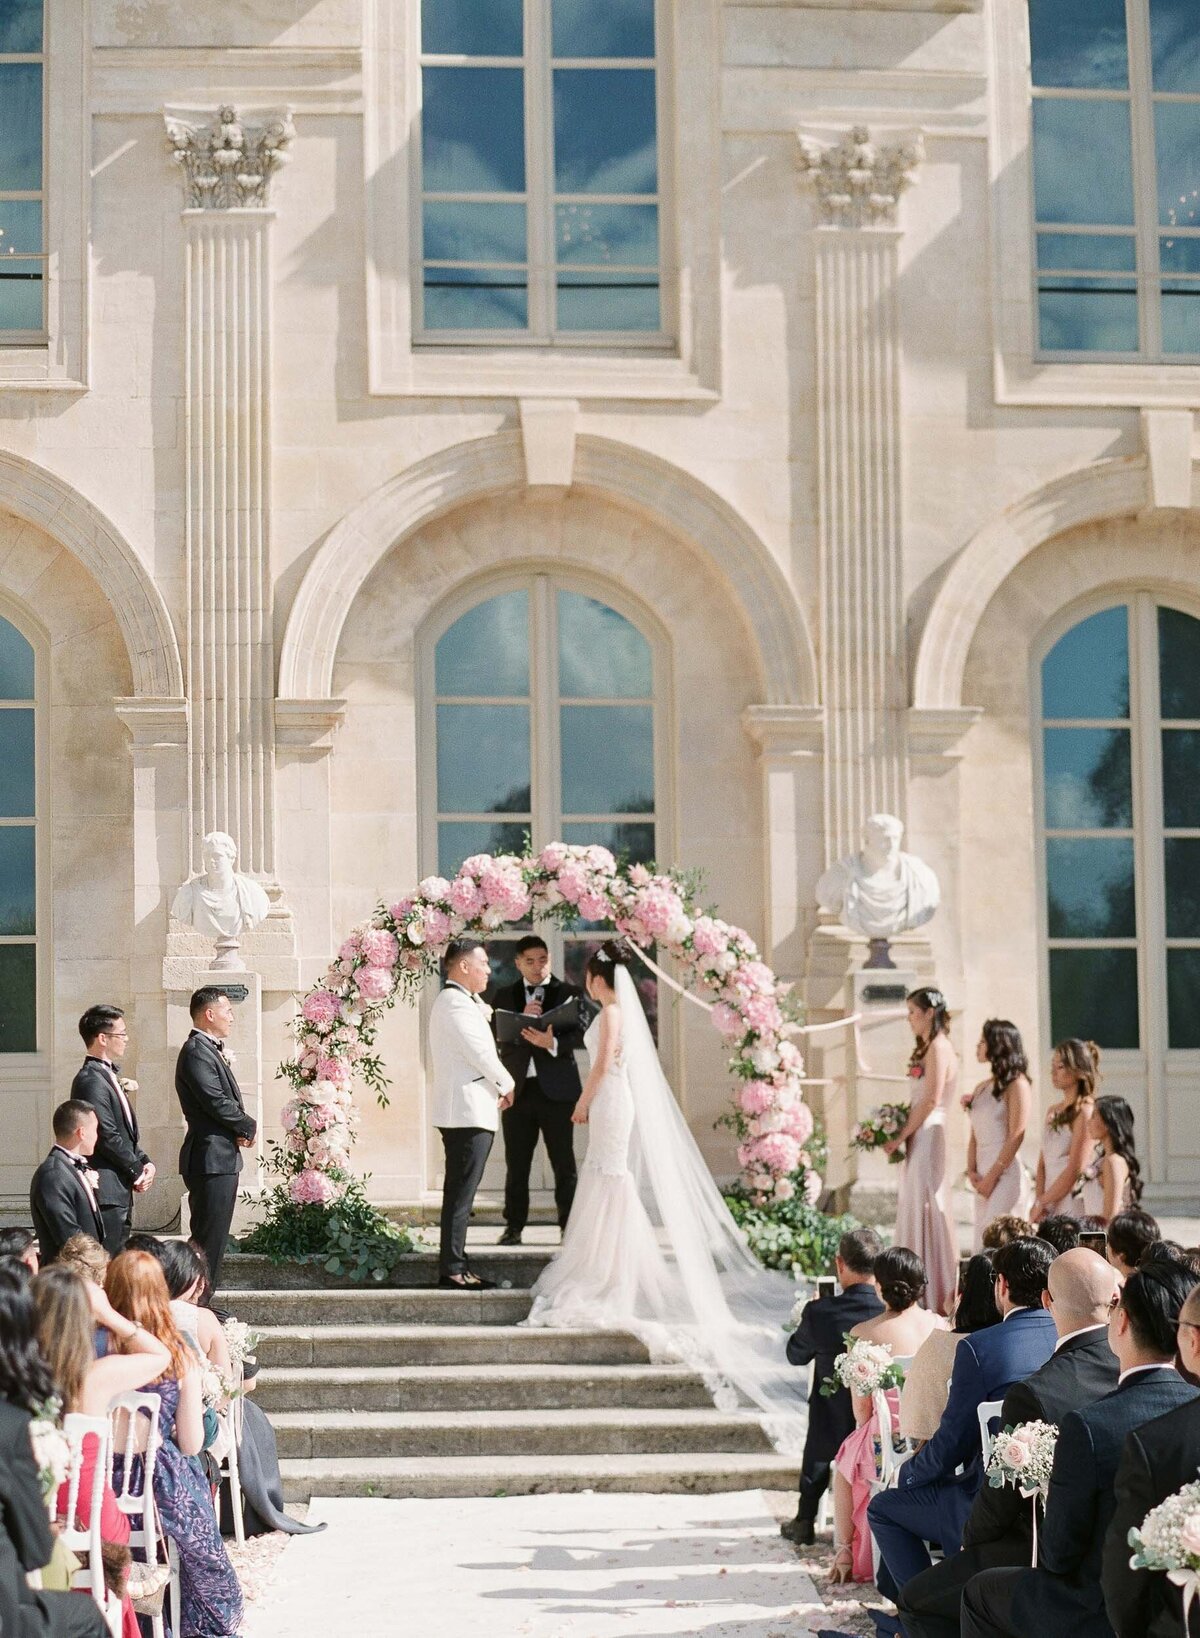 30-Chateau-de-Chantilly-wedding-ceremony-Alexandra-Vonk-photography